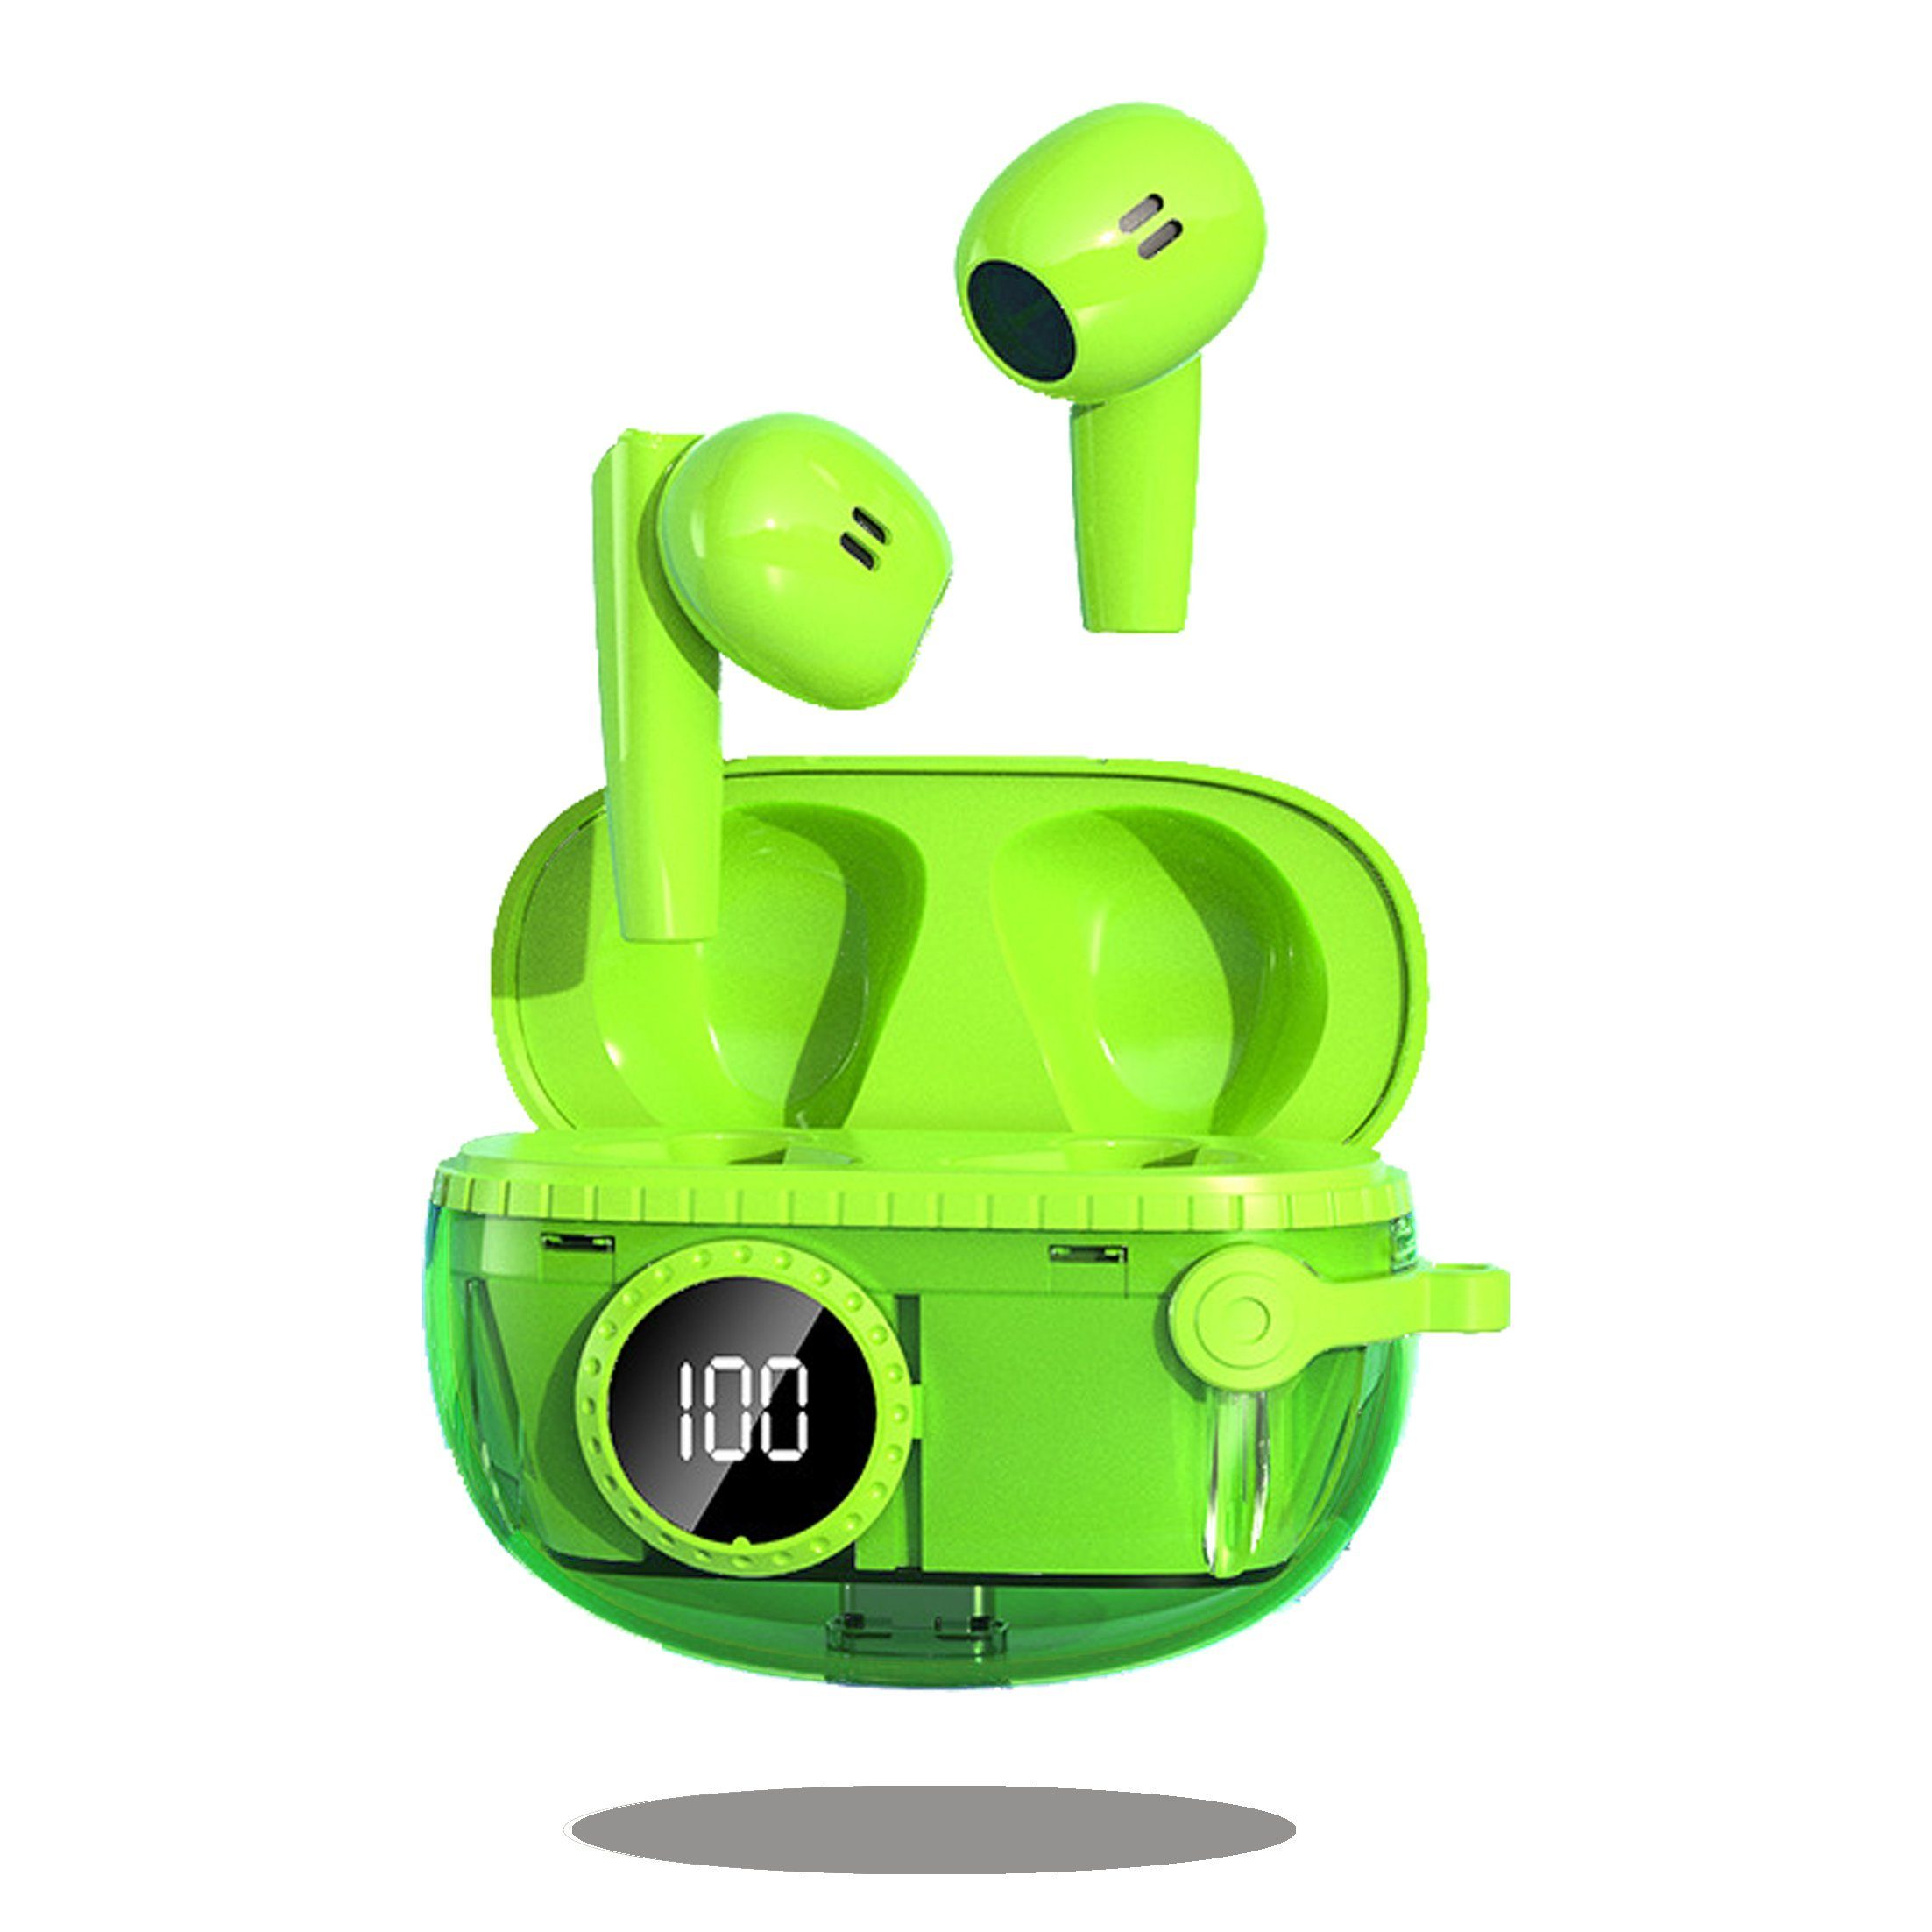 Diida grün Geräuschunterdrückung,Smart Kopfhörer,In-Ear-Bluetooth-Kopfhörer Funk-Kopfhörer mit